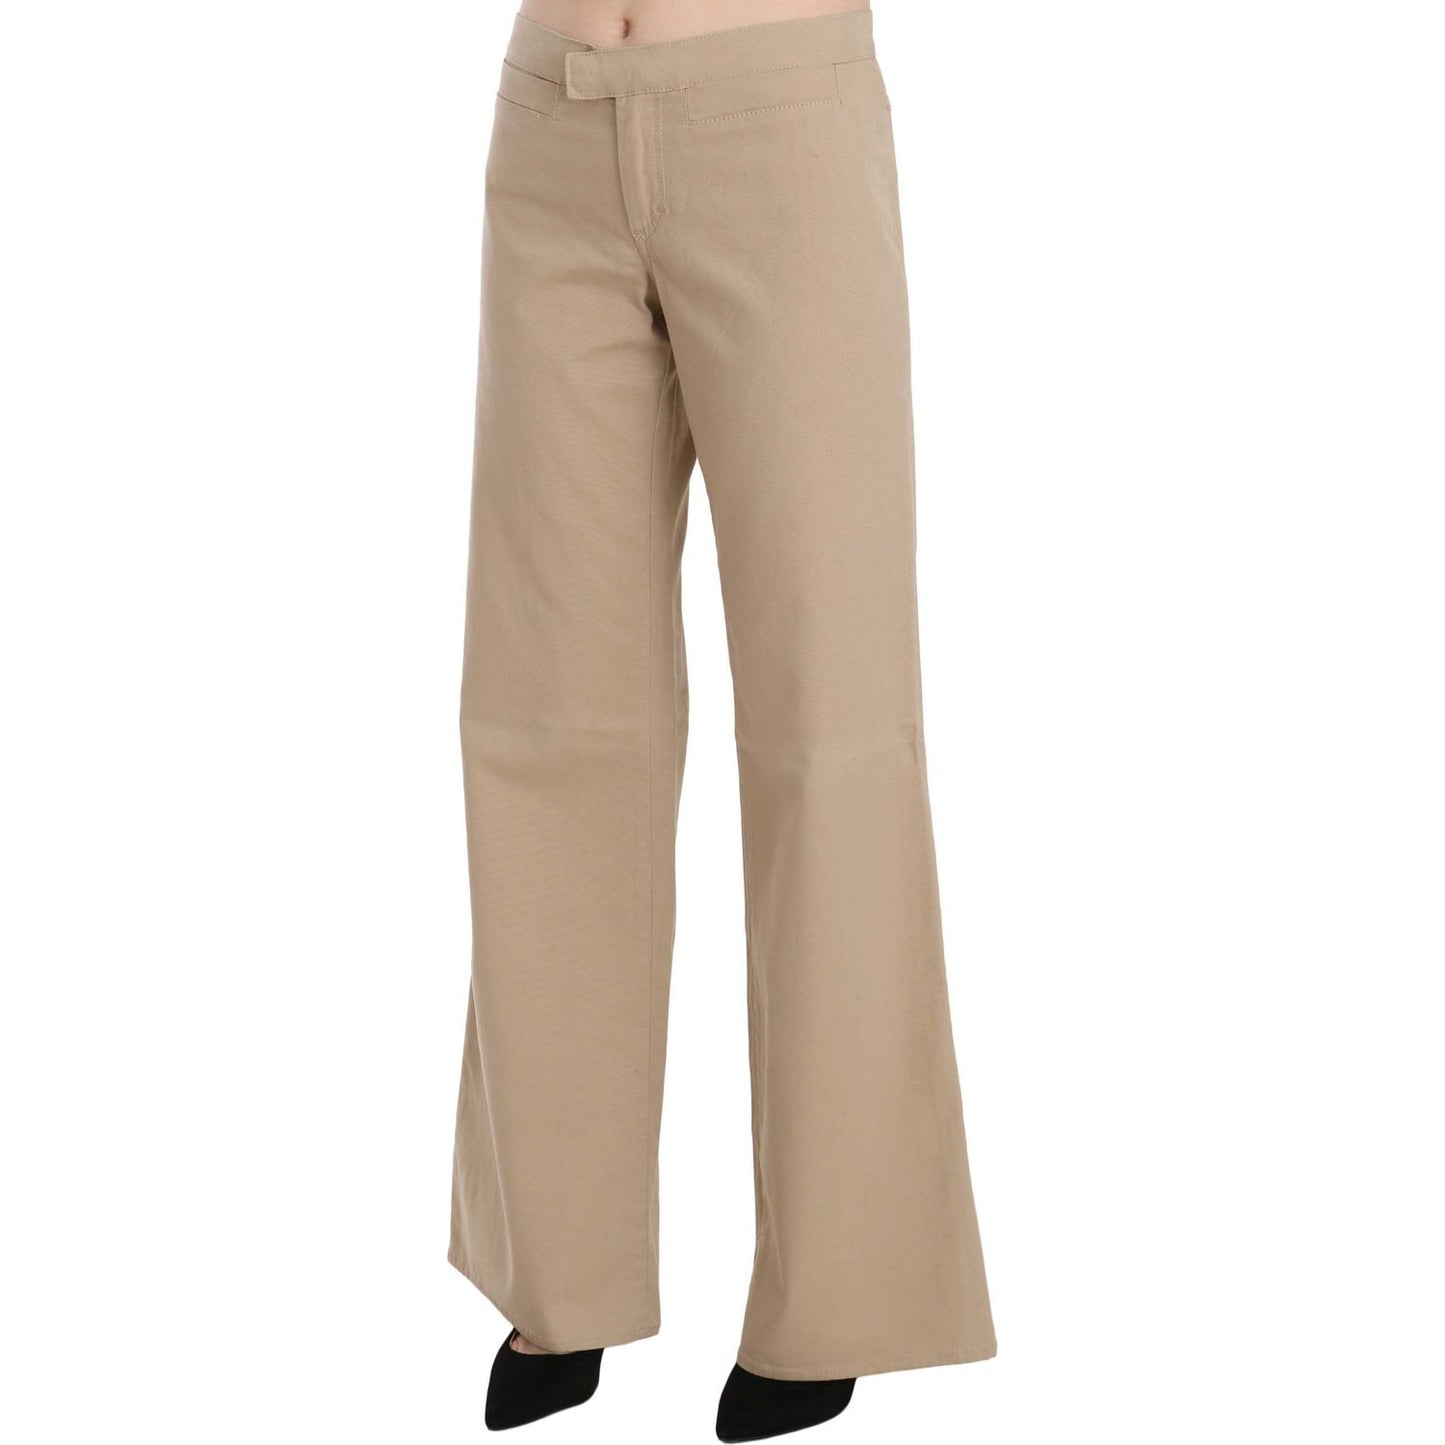 Just Cavalli Beige Mid Waist Flared Luxury Trousers Jeans & Pants beige-cotton-mid-waist-flared-trousers-pants